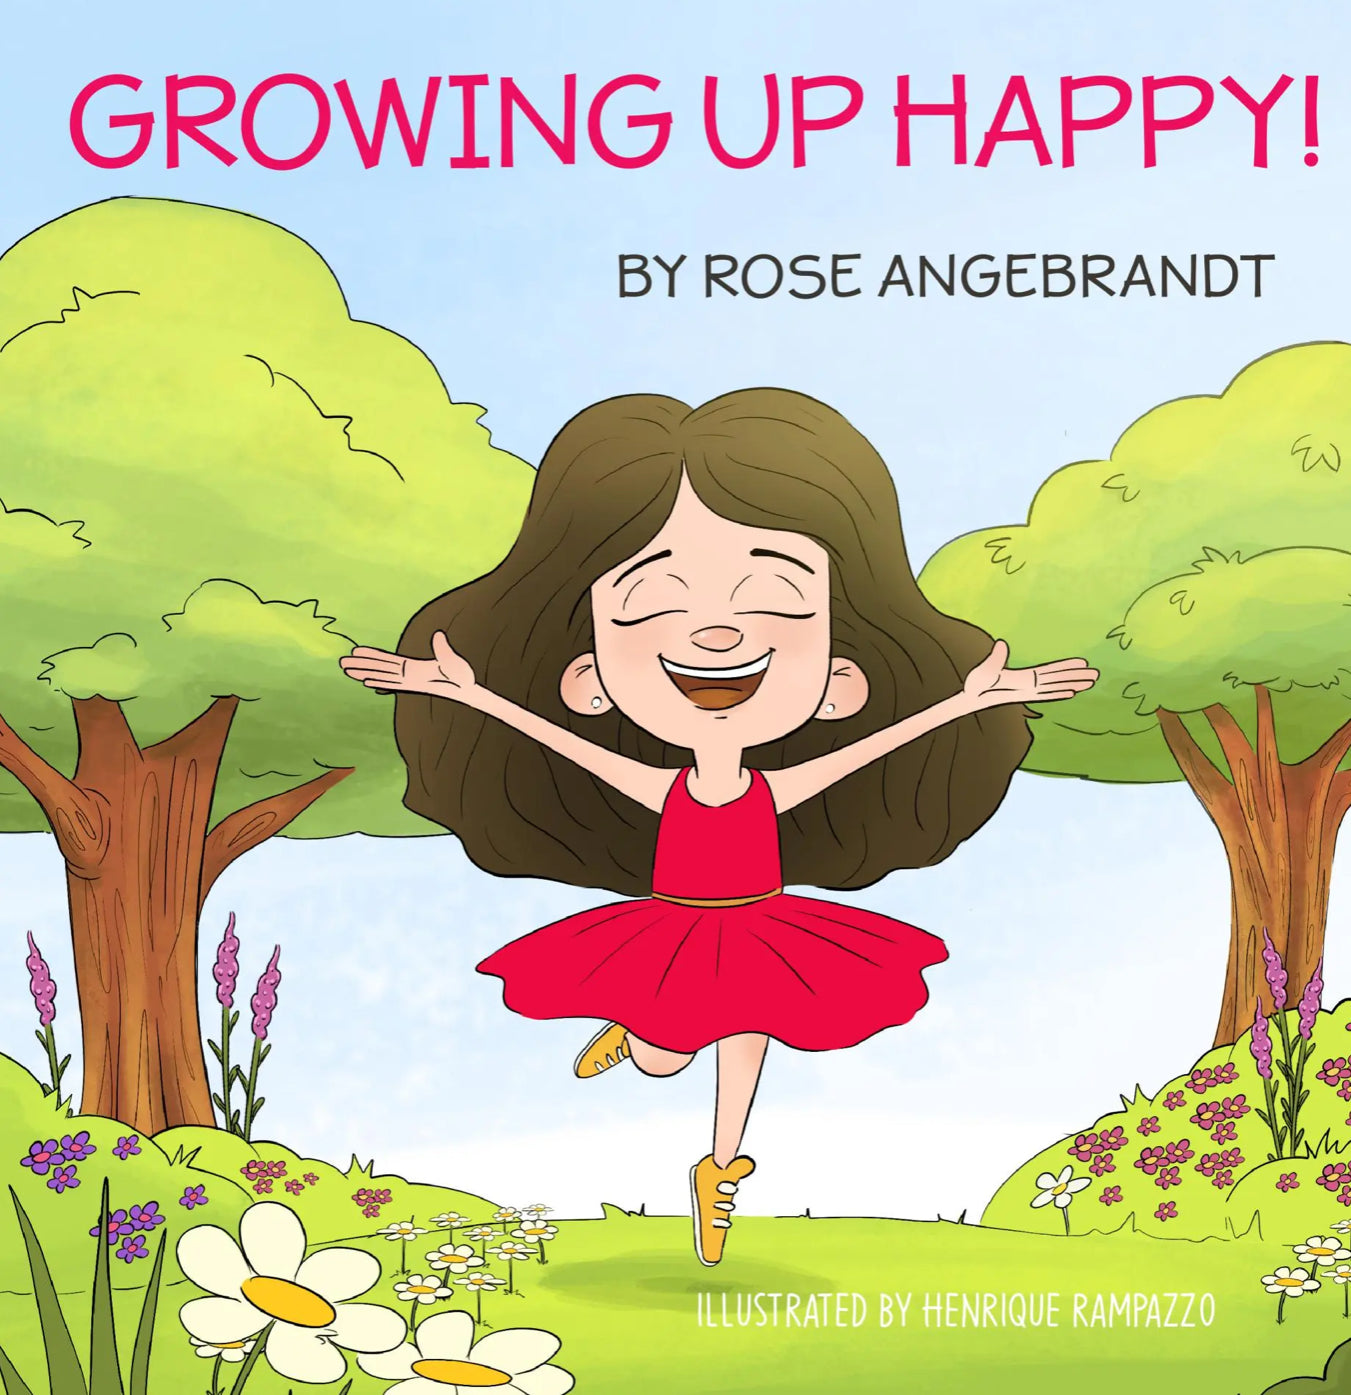 RA-01-HAP “Happy” Book 1 Growing Up Series